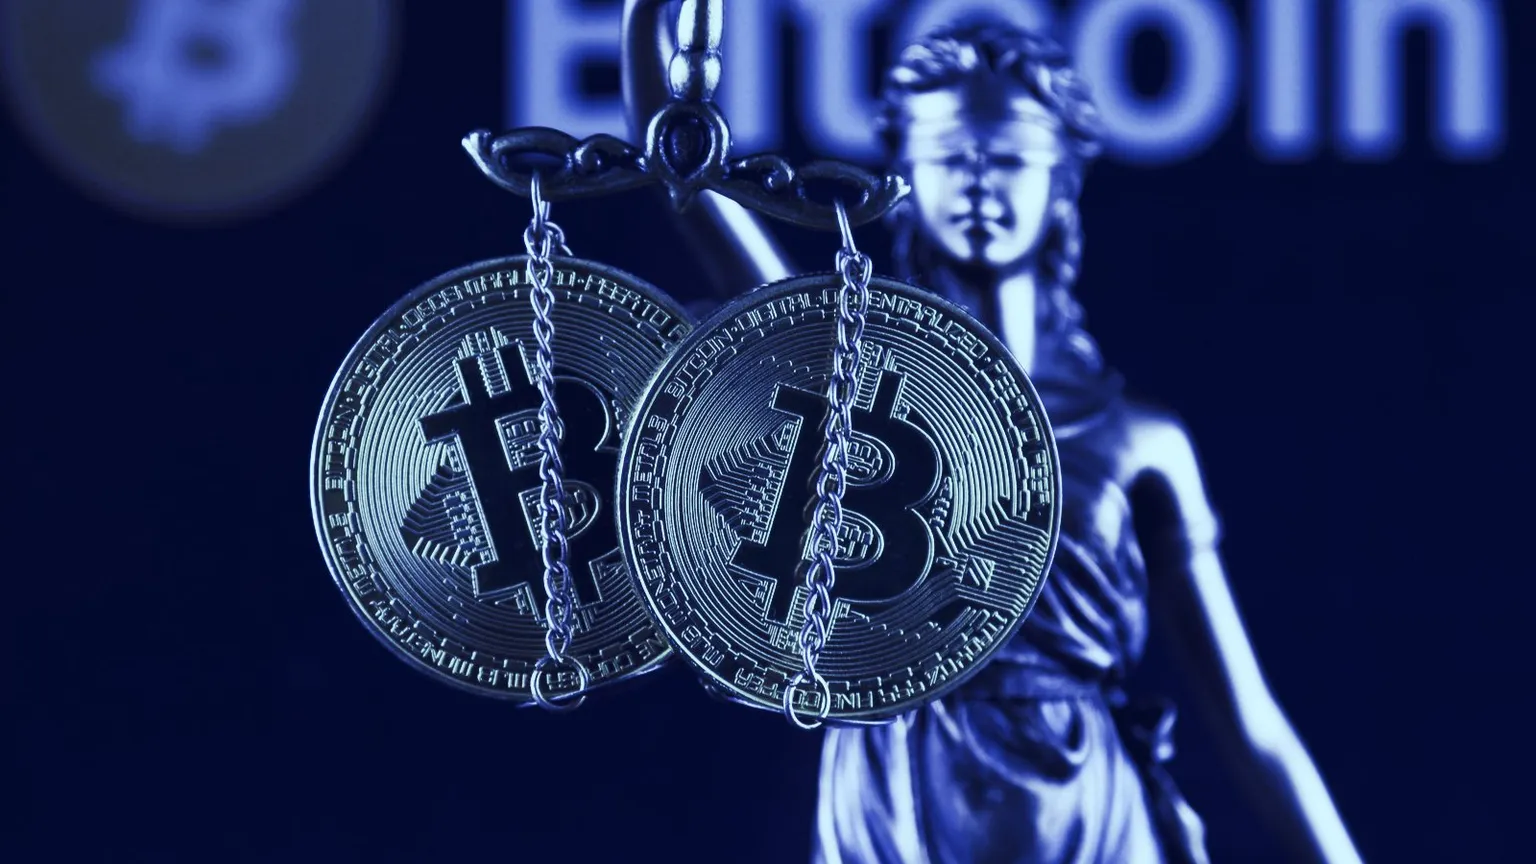 Alexander Vinnik allegedly laundered $4 billion in Bitcoin. (Image: Shutterstock)